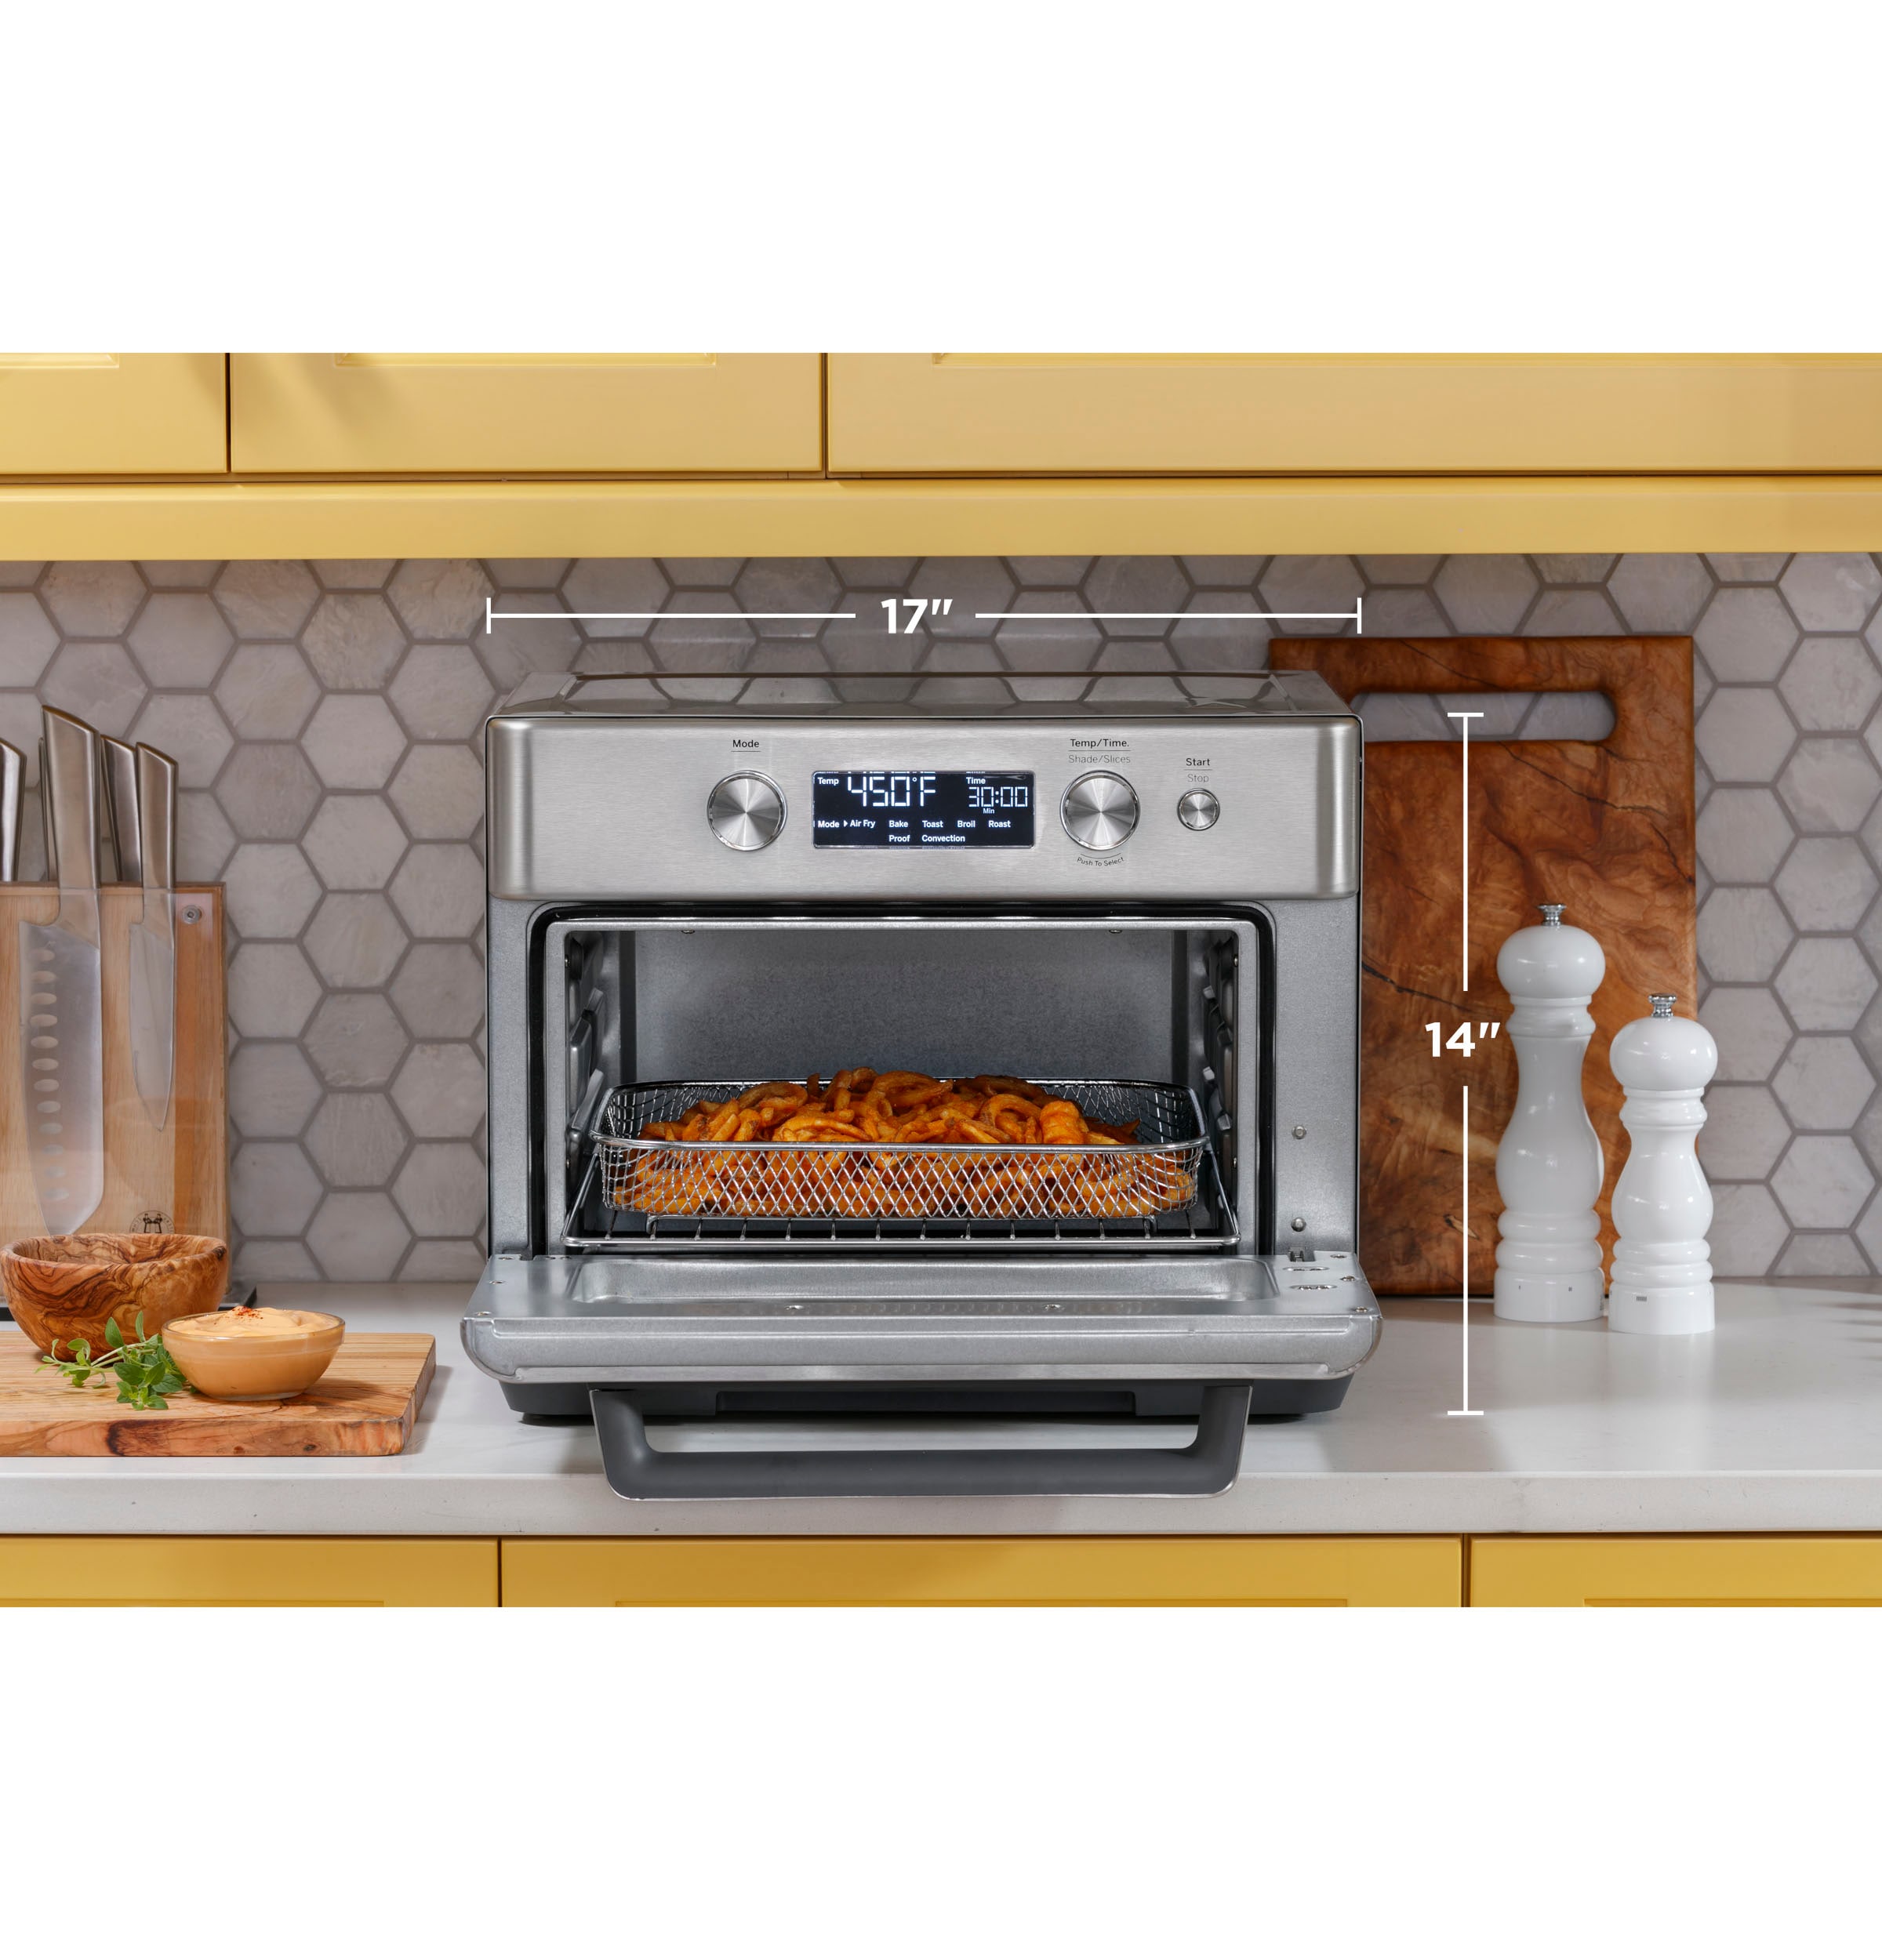 Farberware Air Fryer Toaster Oven, Stainless Steel, Countertop